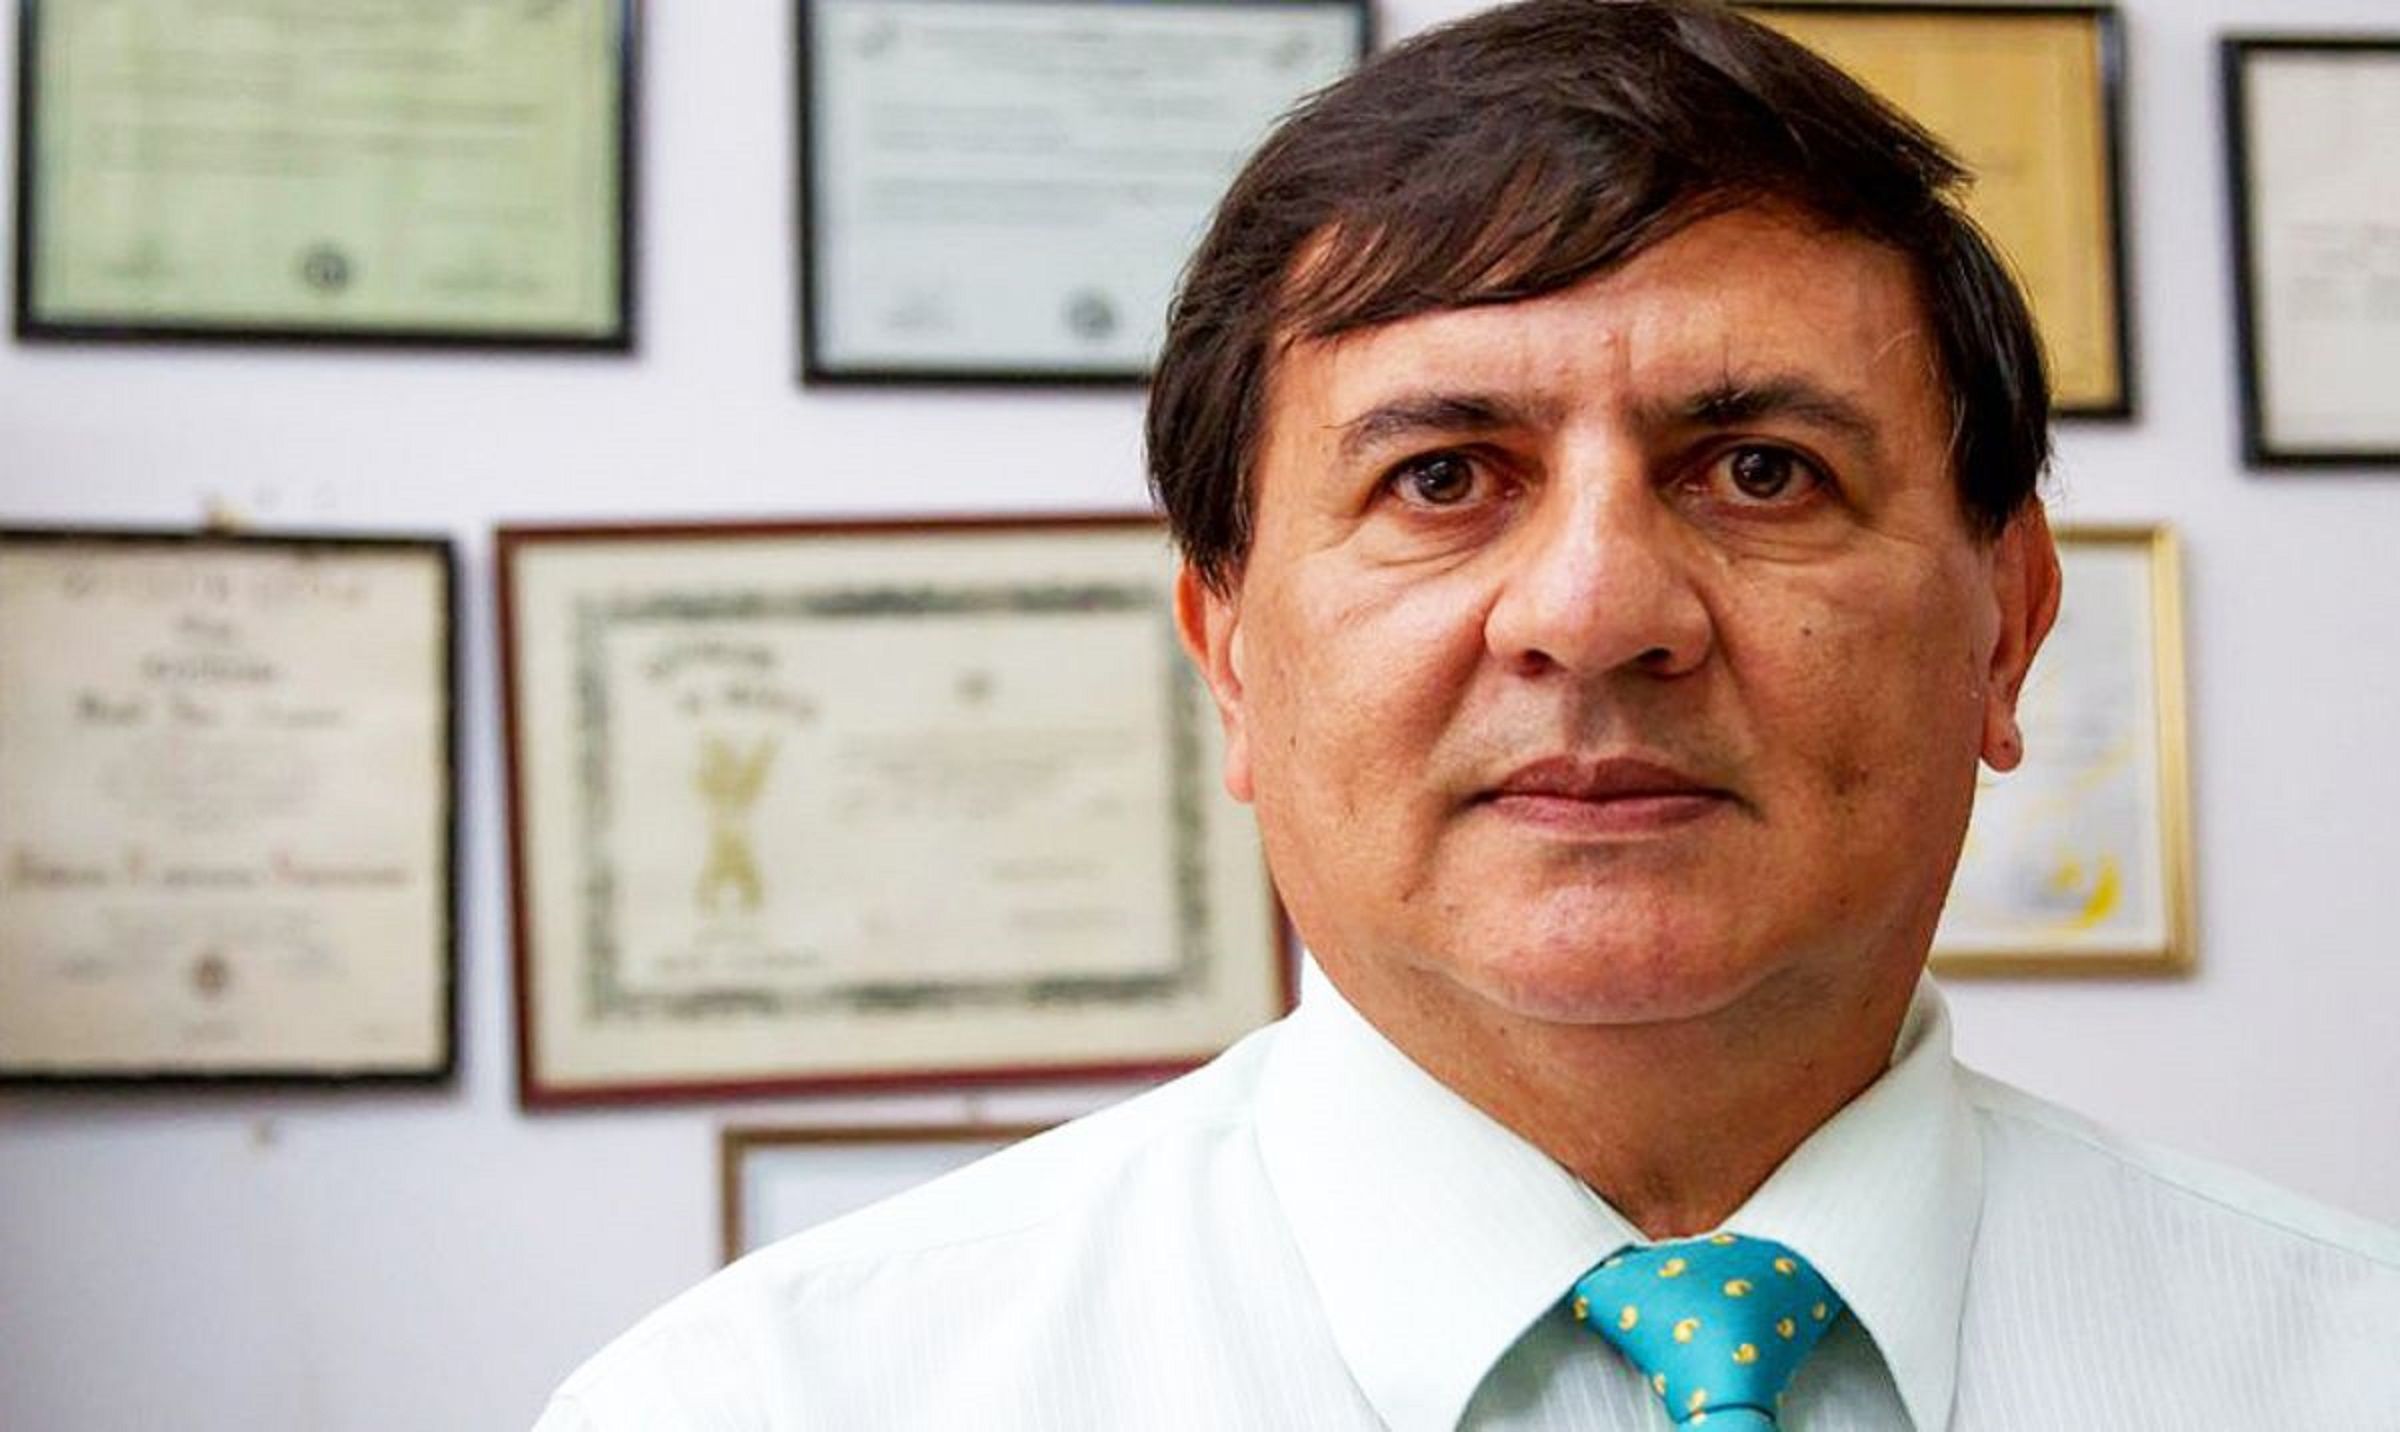  RaÃºl Reynoso, ex juez federal de OrÃ¡n